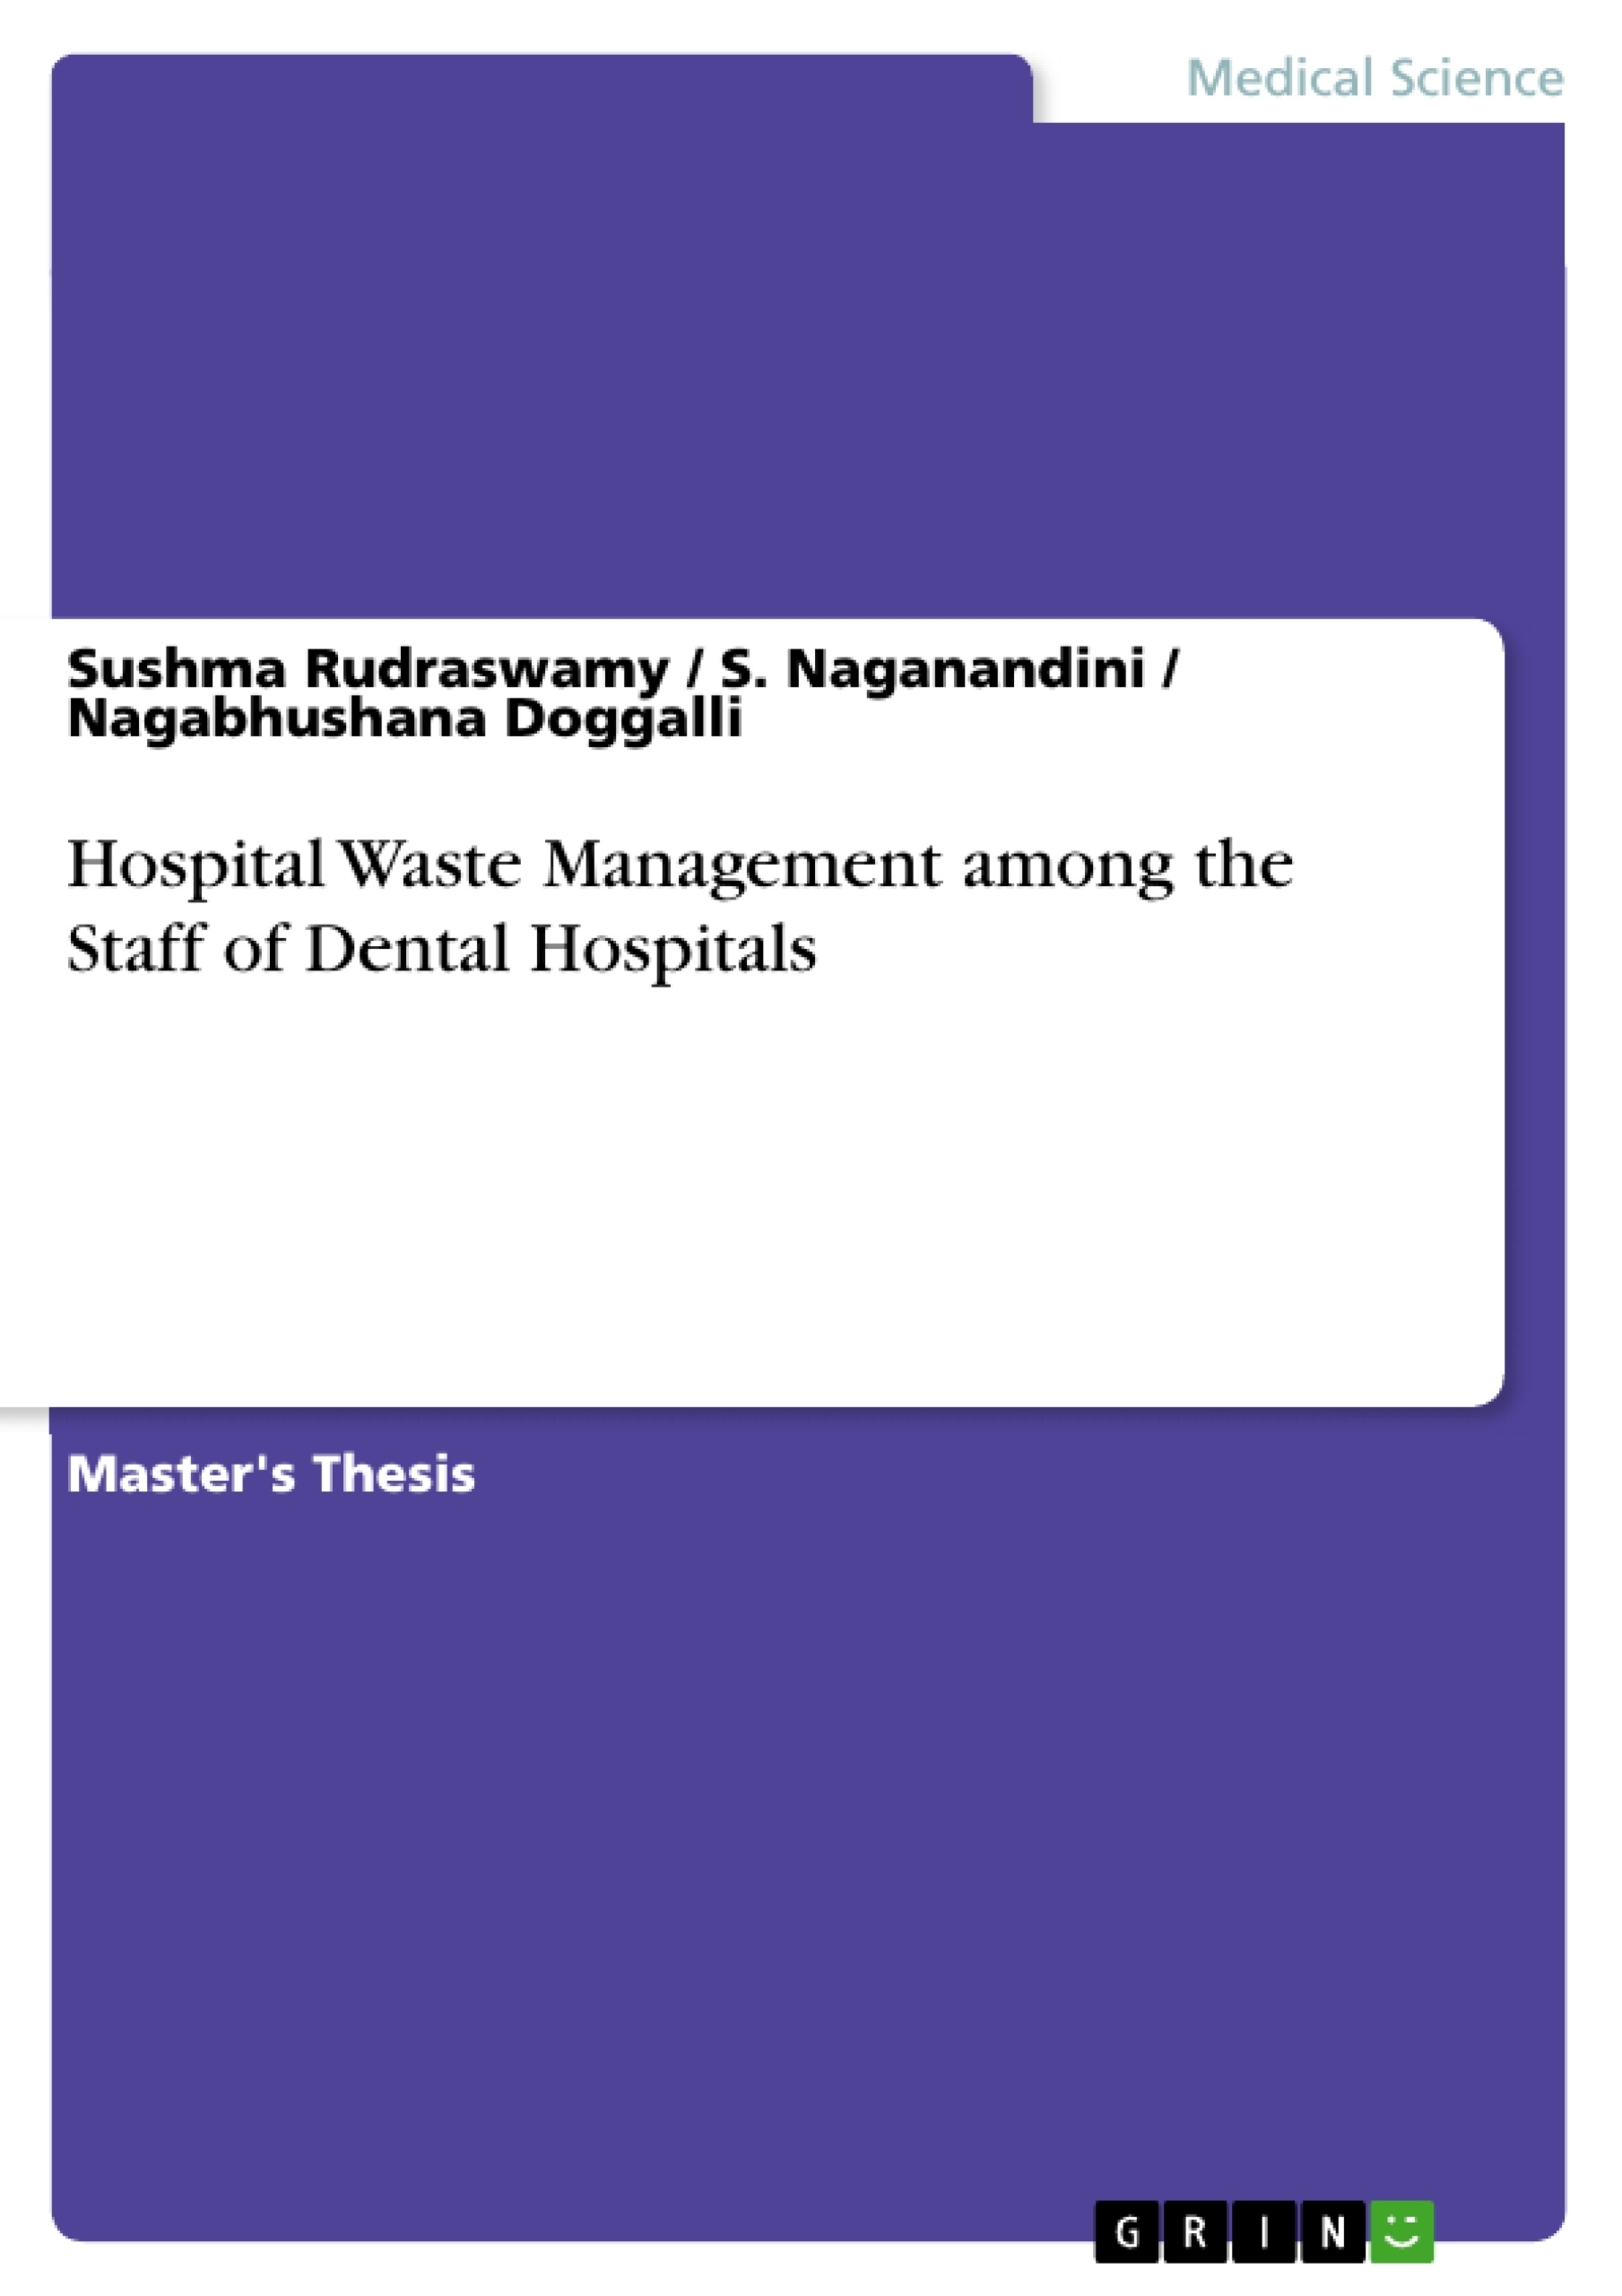 Title: Hospital Waste Management among the Staff of Dental Hospitals